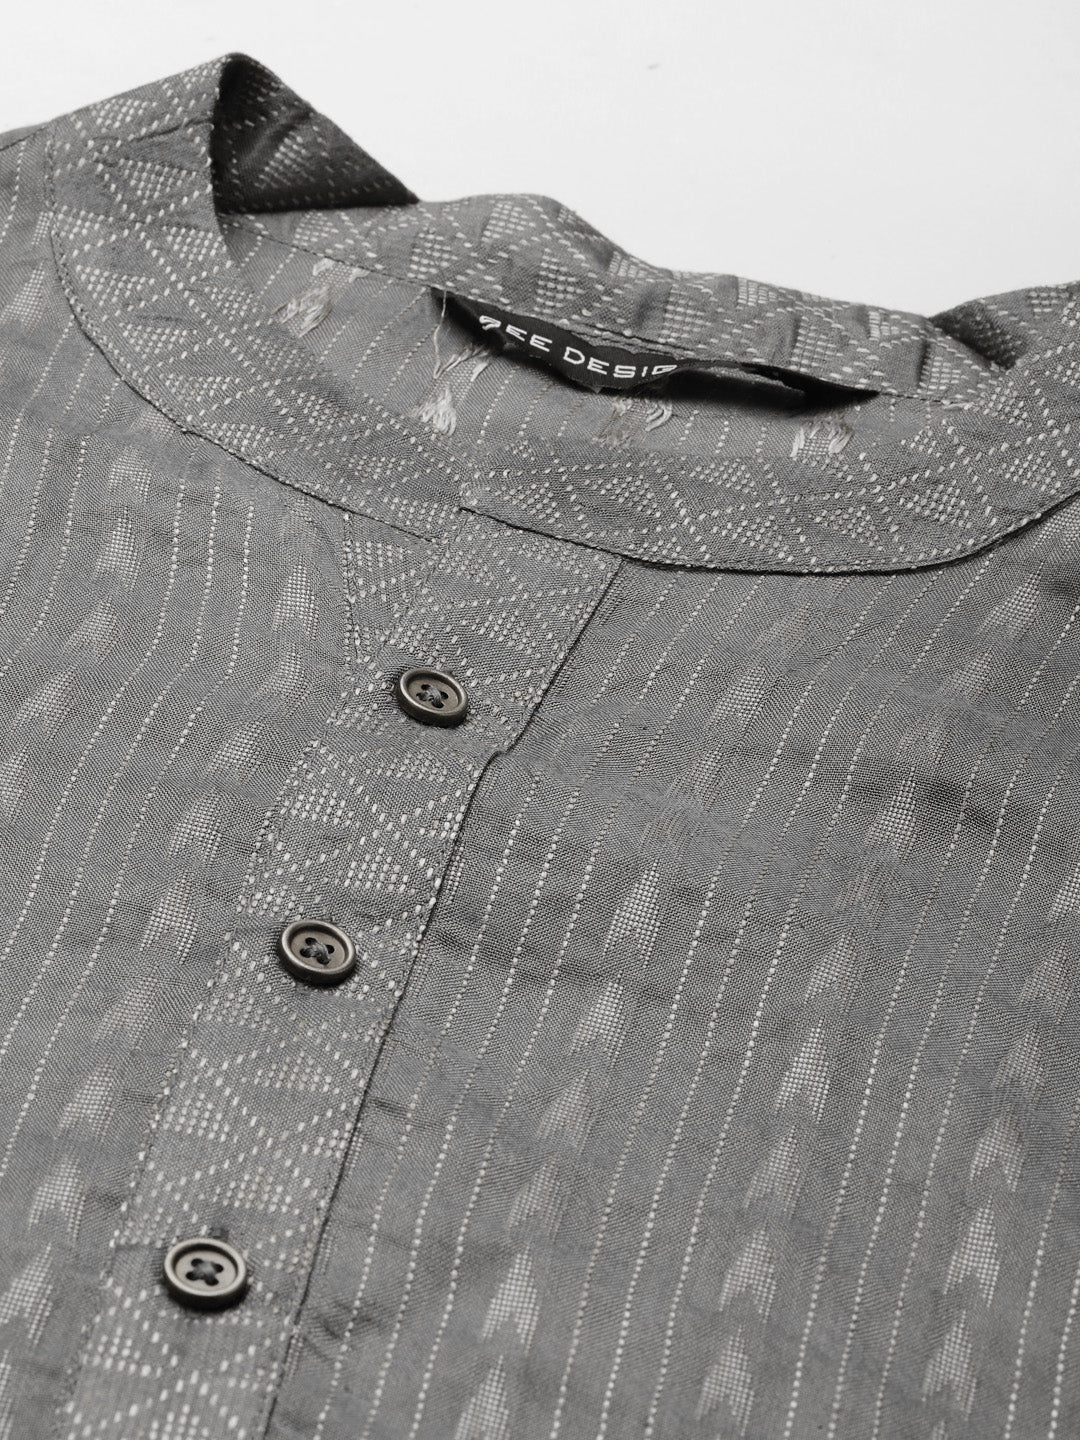 Men Grey & Beige Woven Design Thread Work Kurta With Pyjama